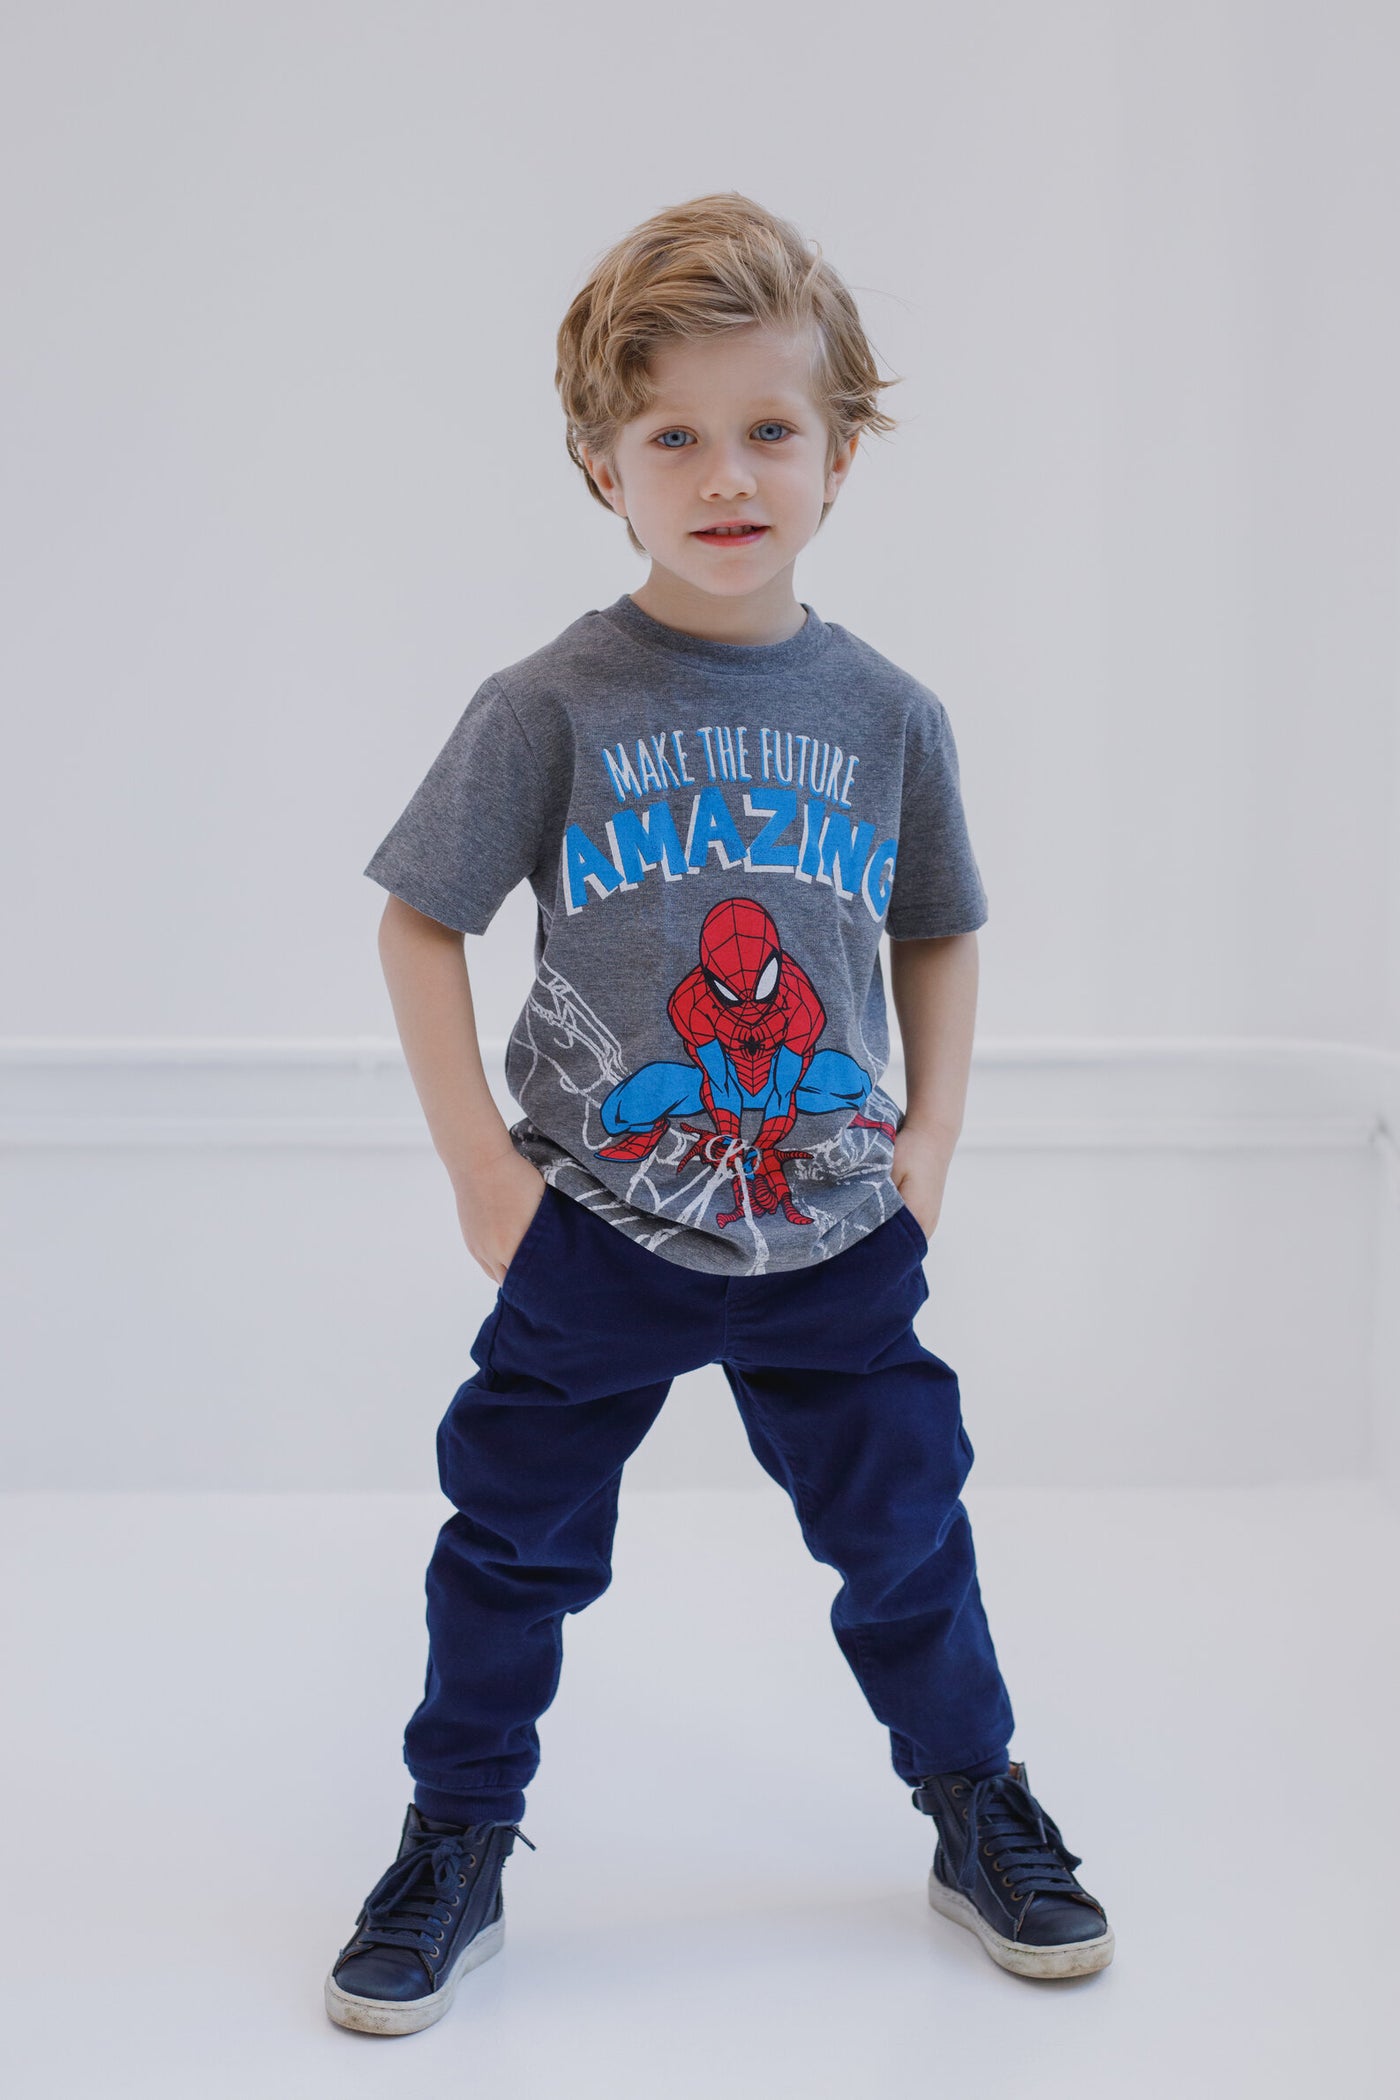 Marvel Avengers Spider-Man Capitán América Black Panther paquete de 2 camisetas de niño a niño pequeño